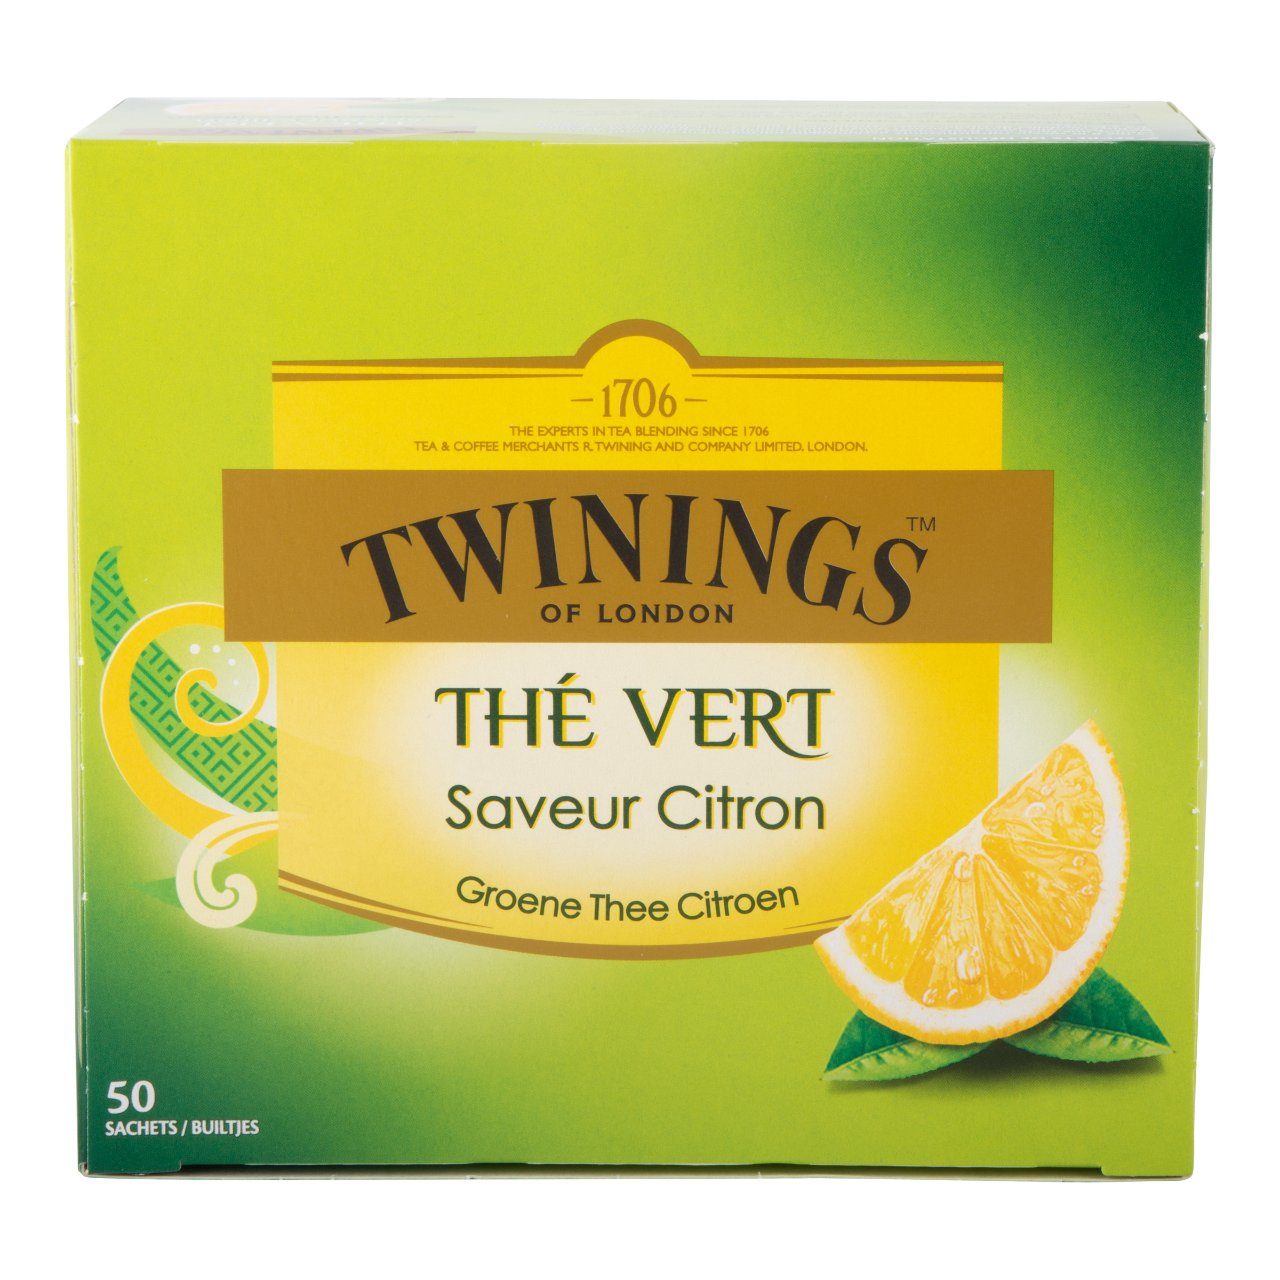 The vert citron thee